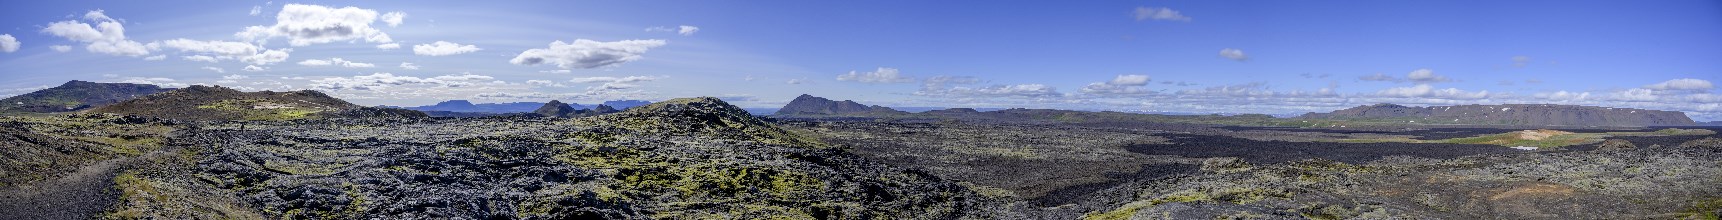 Lava field of the Krafla volcanic system